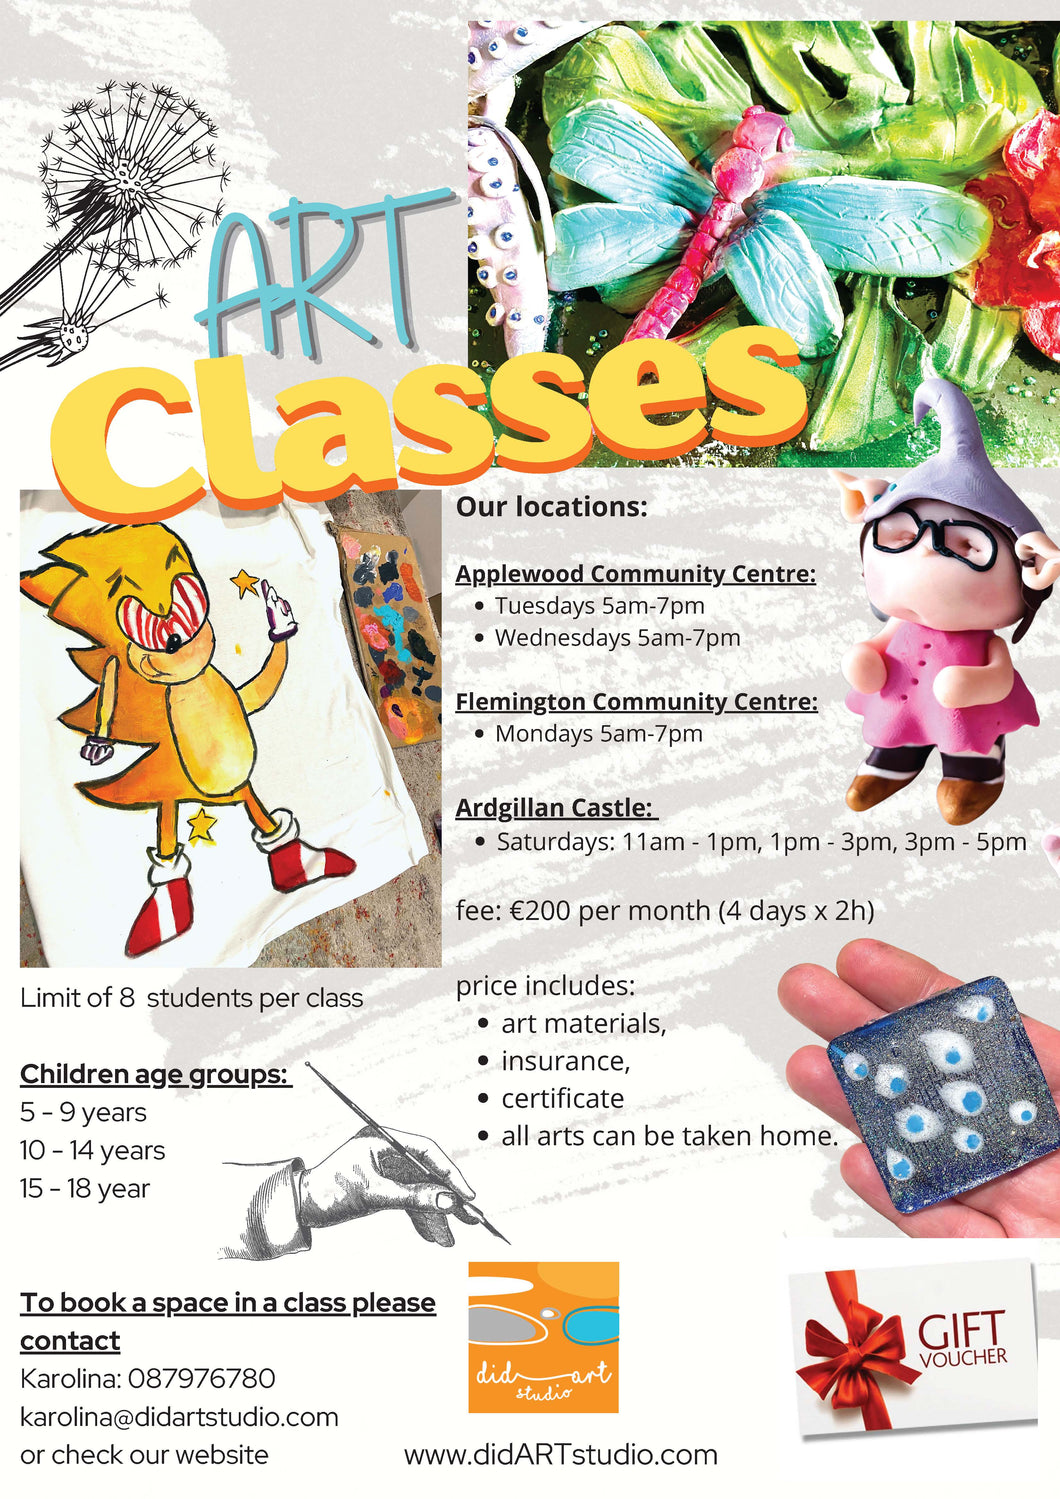 Applewood Community Centre - art classes